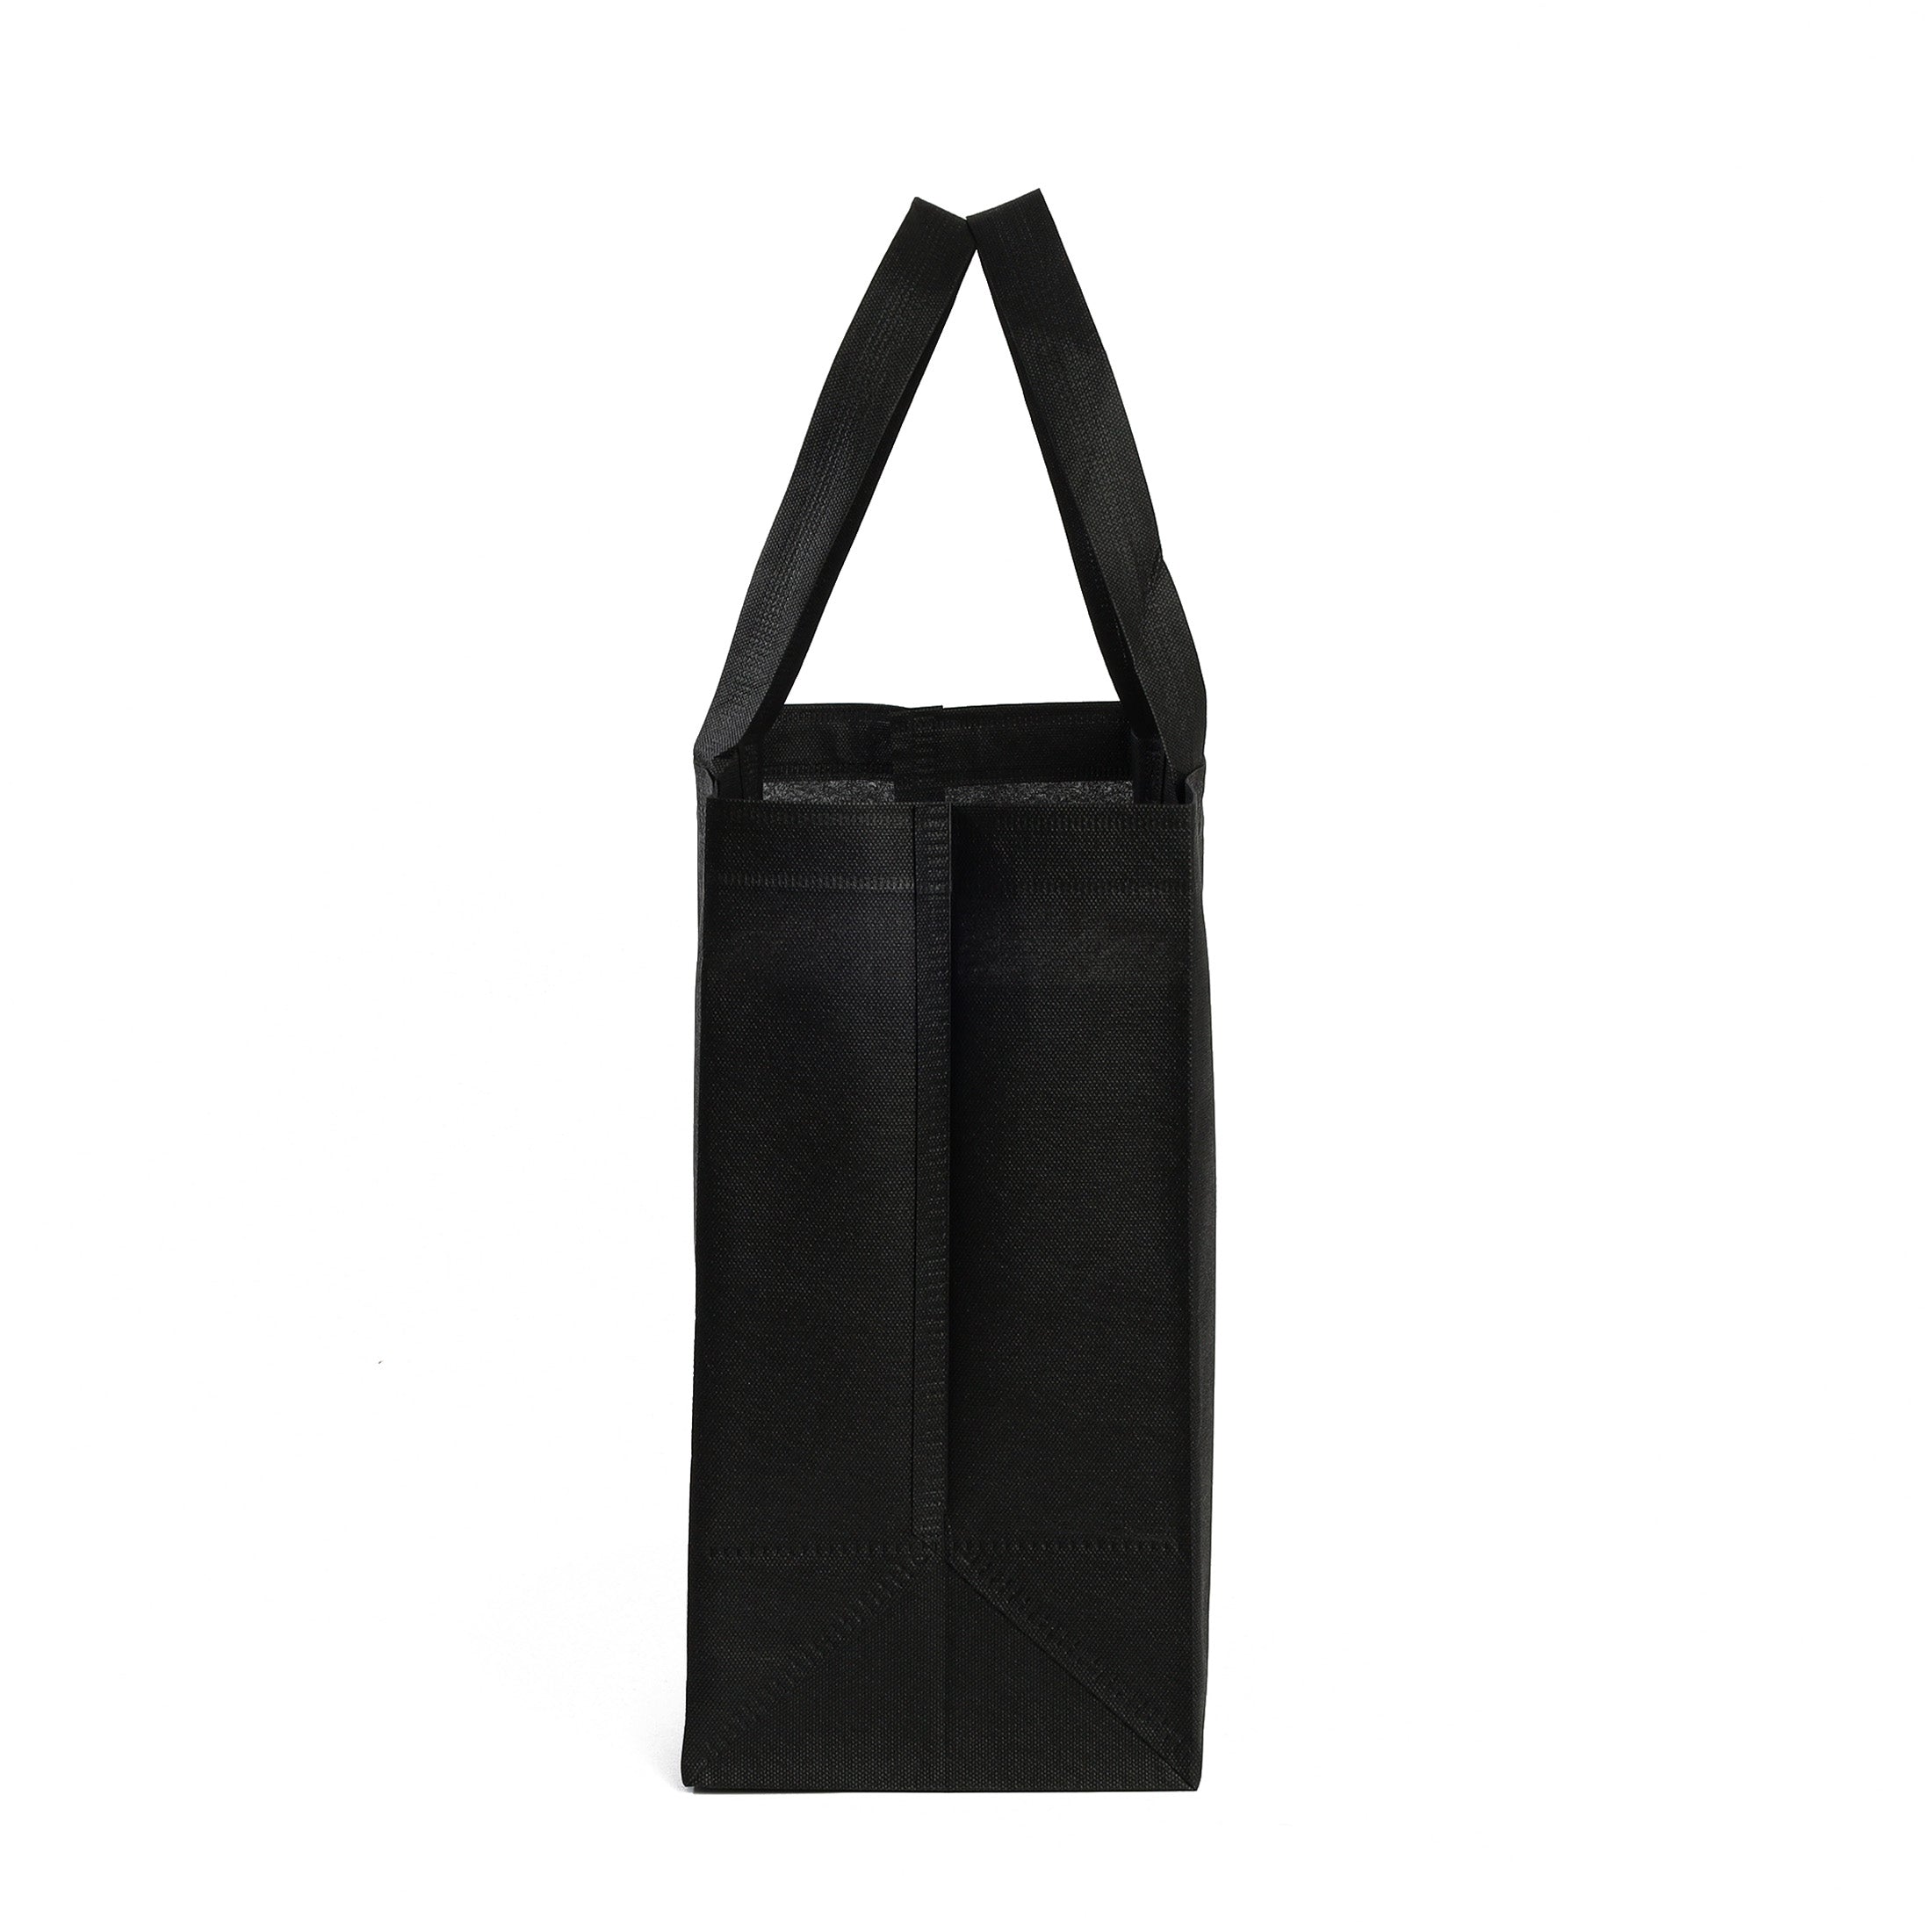 Everyday Bag in Plain Black